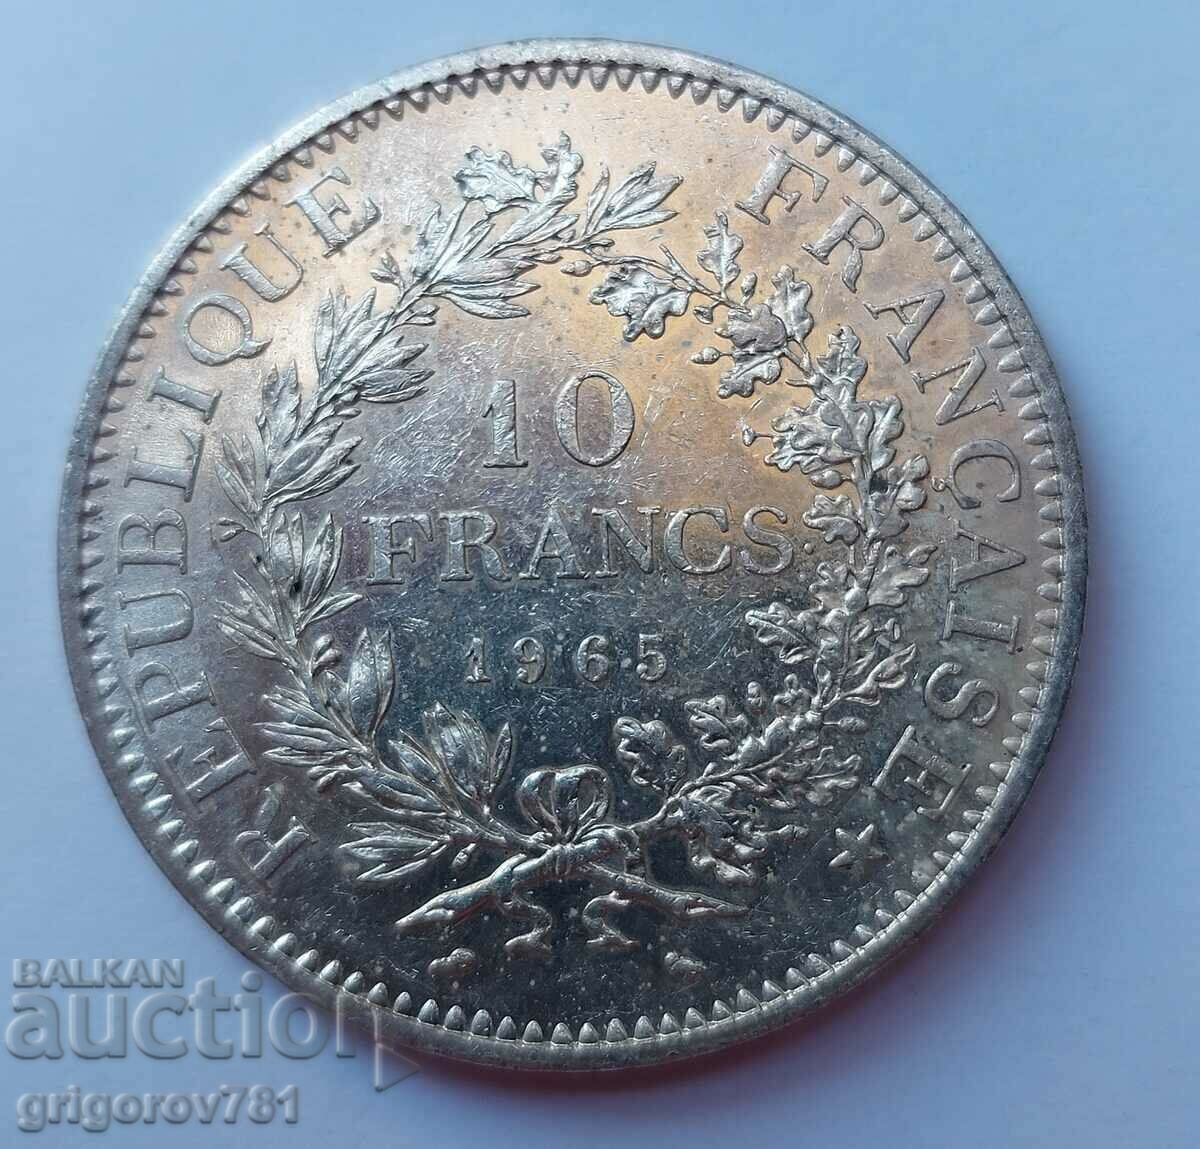 10 franci argint Franța 1965 - monedă de argint #4